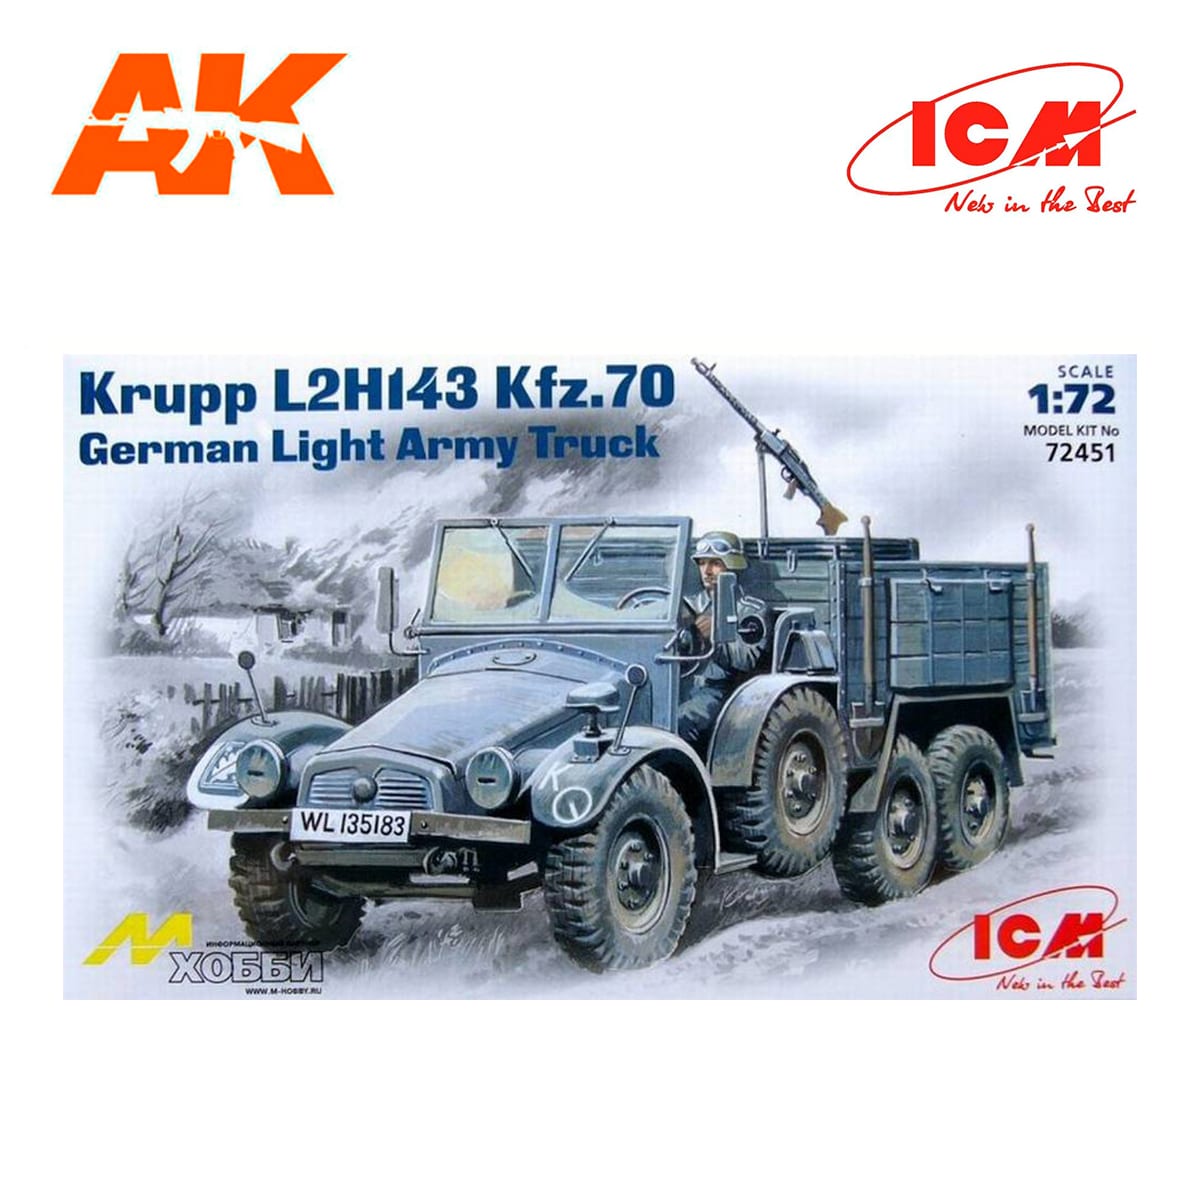 Krupp L2H143 Kfz.70, German Light Army Truck 1/72